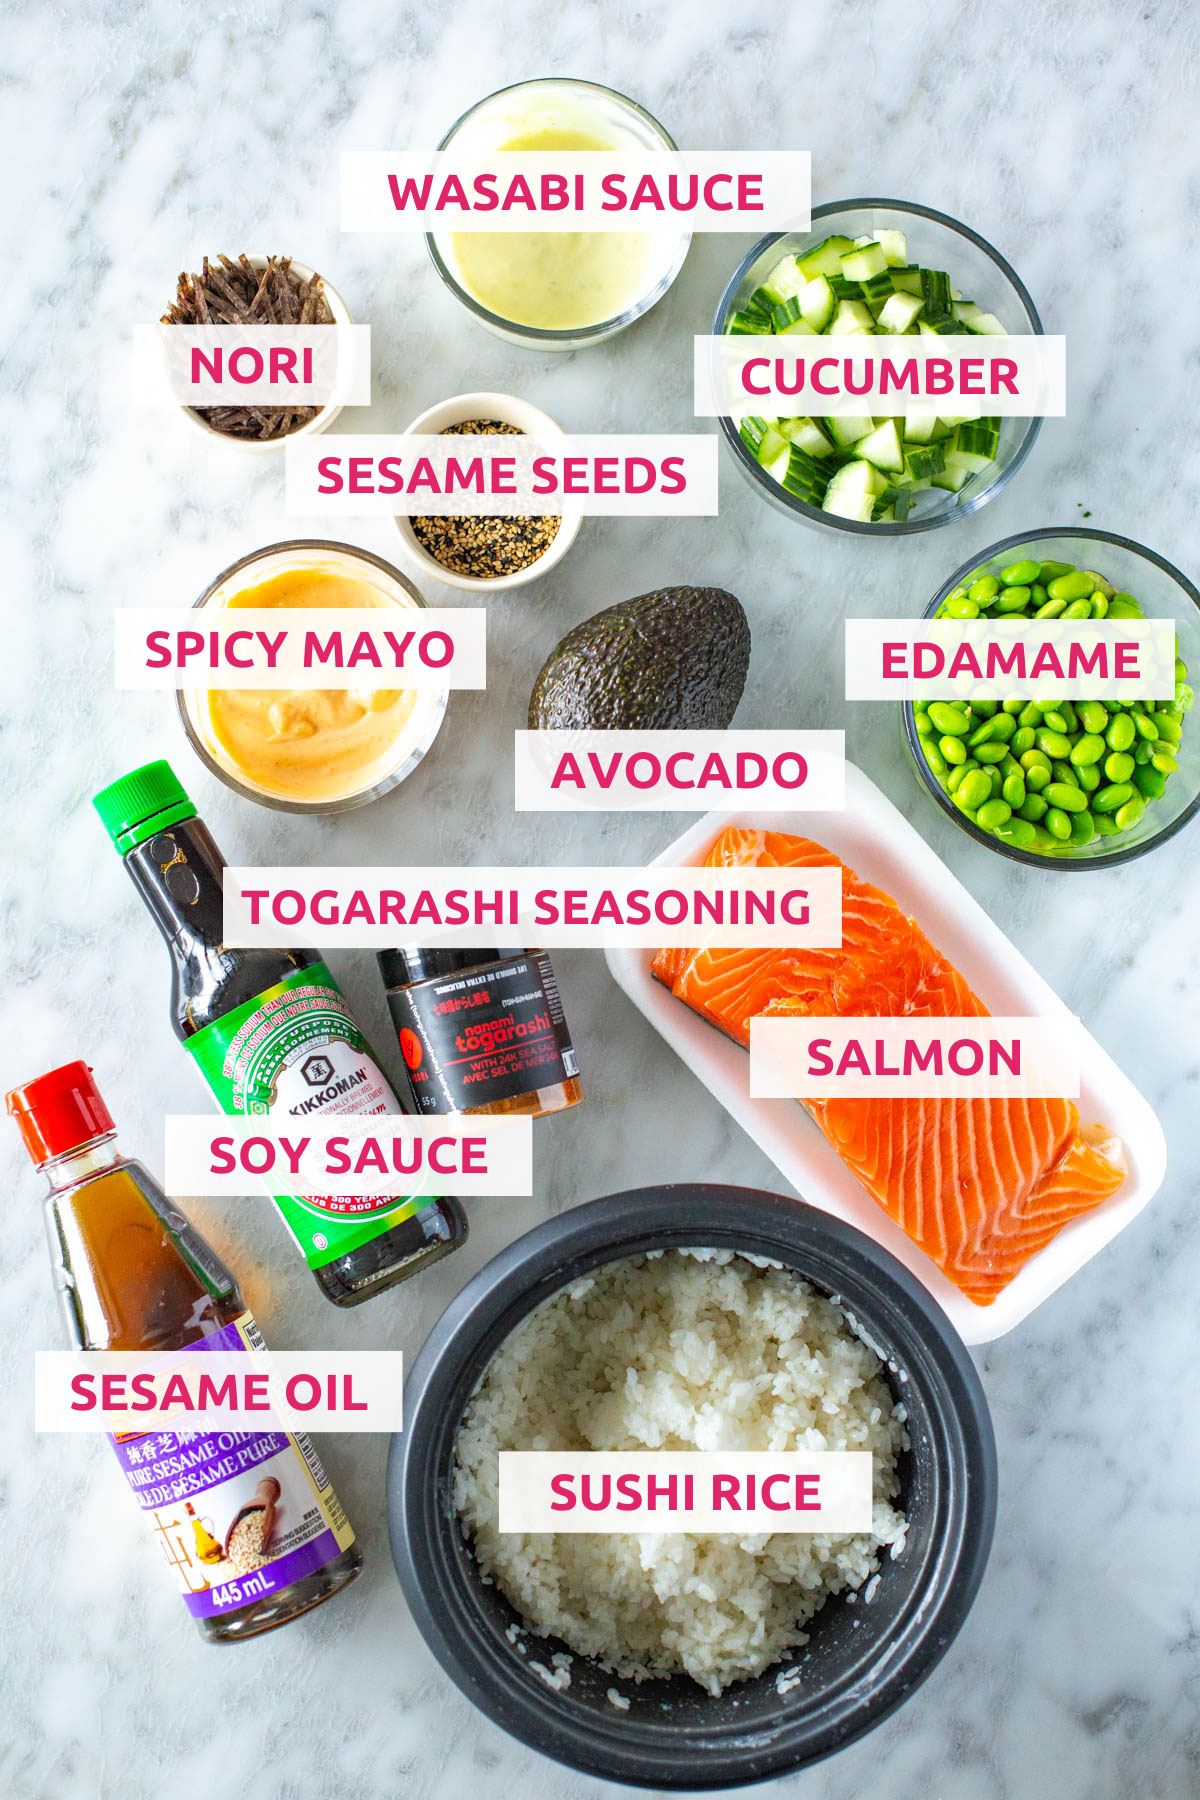 Ingredients for salmon sushi bowls: sushi rice, salmon, sesame oil, soy sauce, togarashi seasoning, avocado, spicy mayo, wasabi sauce, nori, sesame seeds, cucumber and edamame.